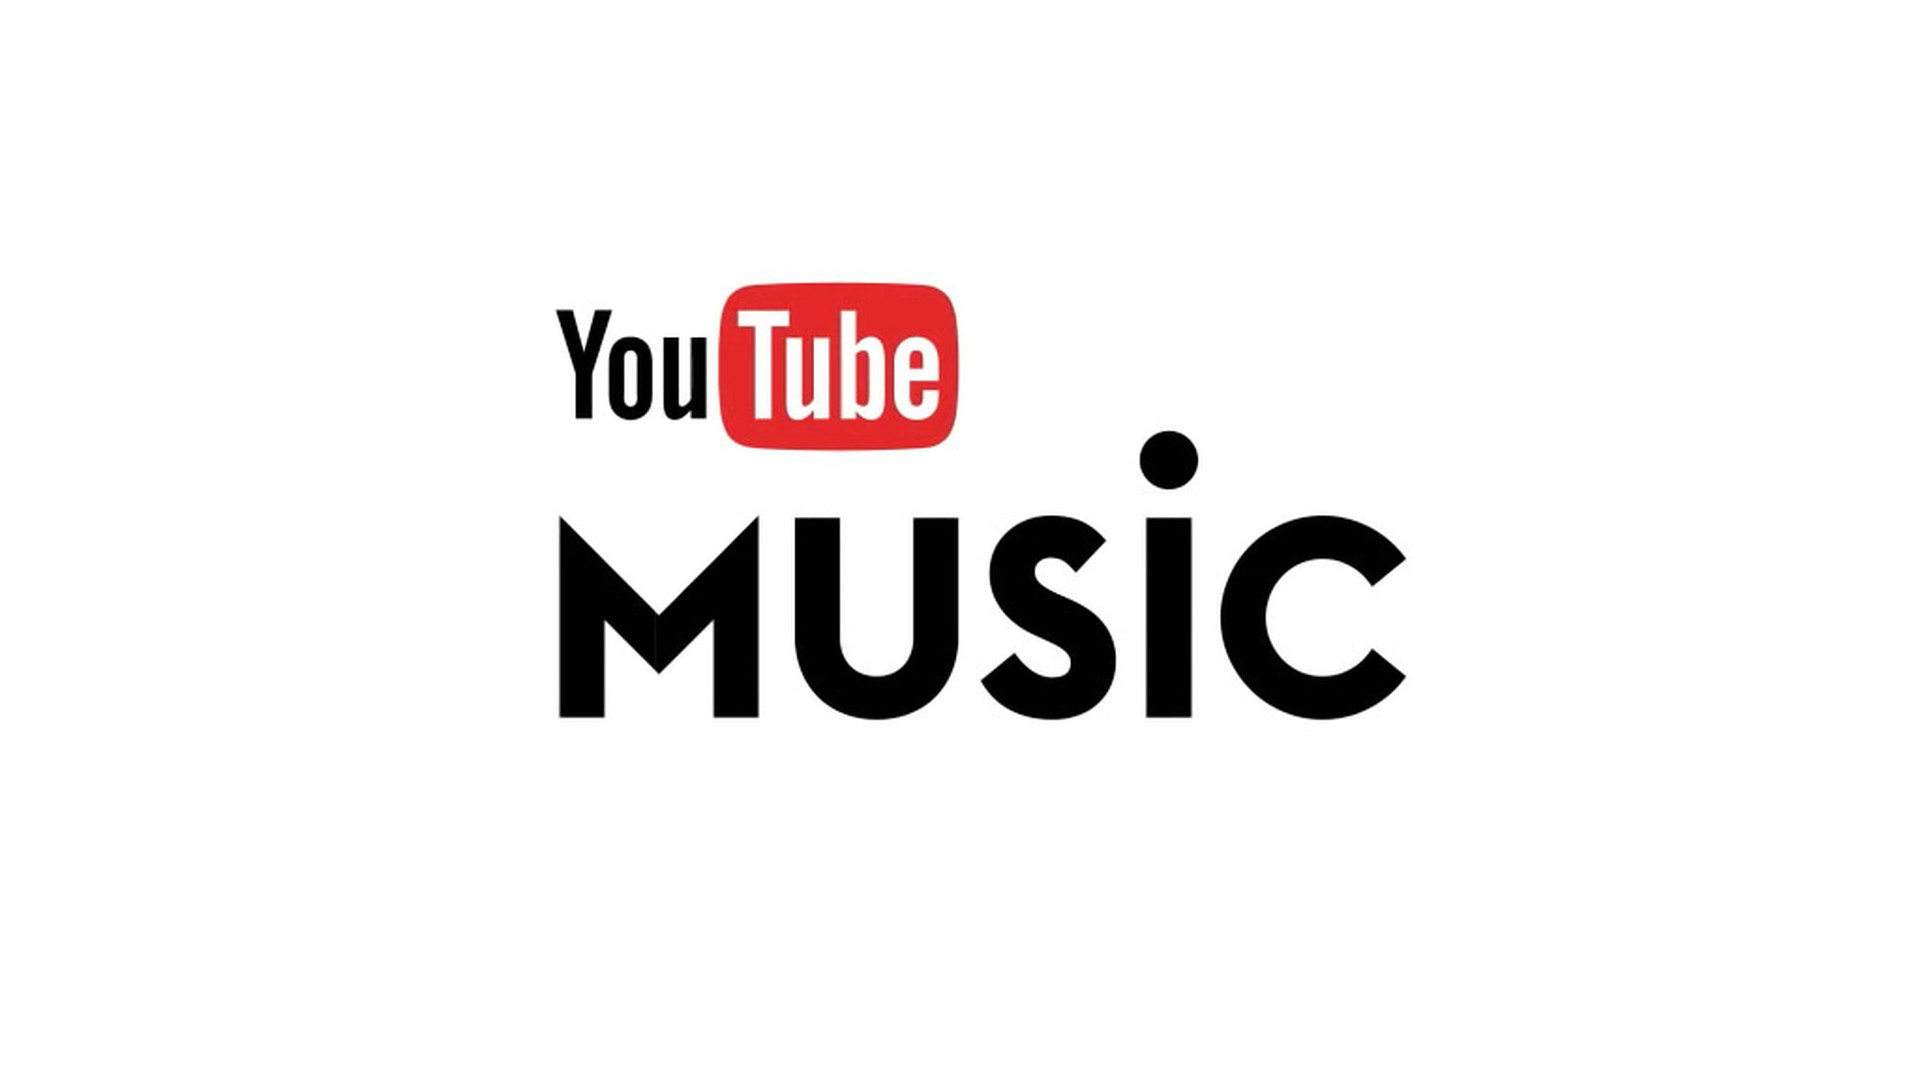 Youtube музыка популярное. Youtube Music логотип. Ютуб Мьюзик. Значок ютуб музыка. Музыкальный логотип.